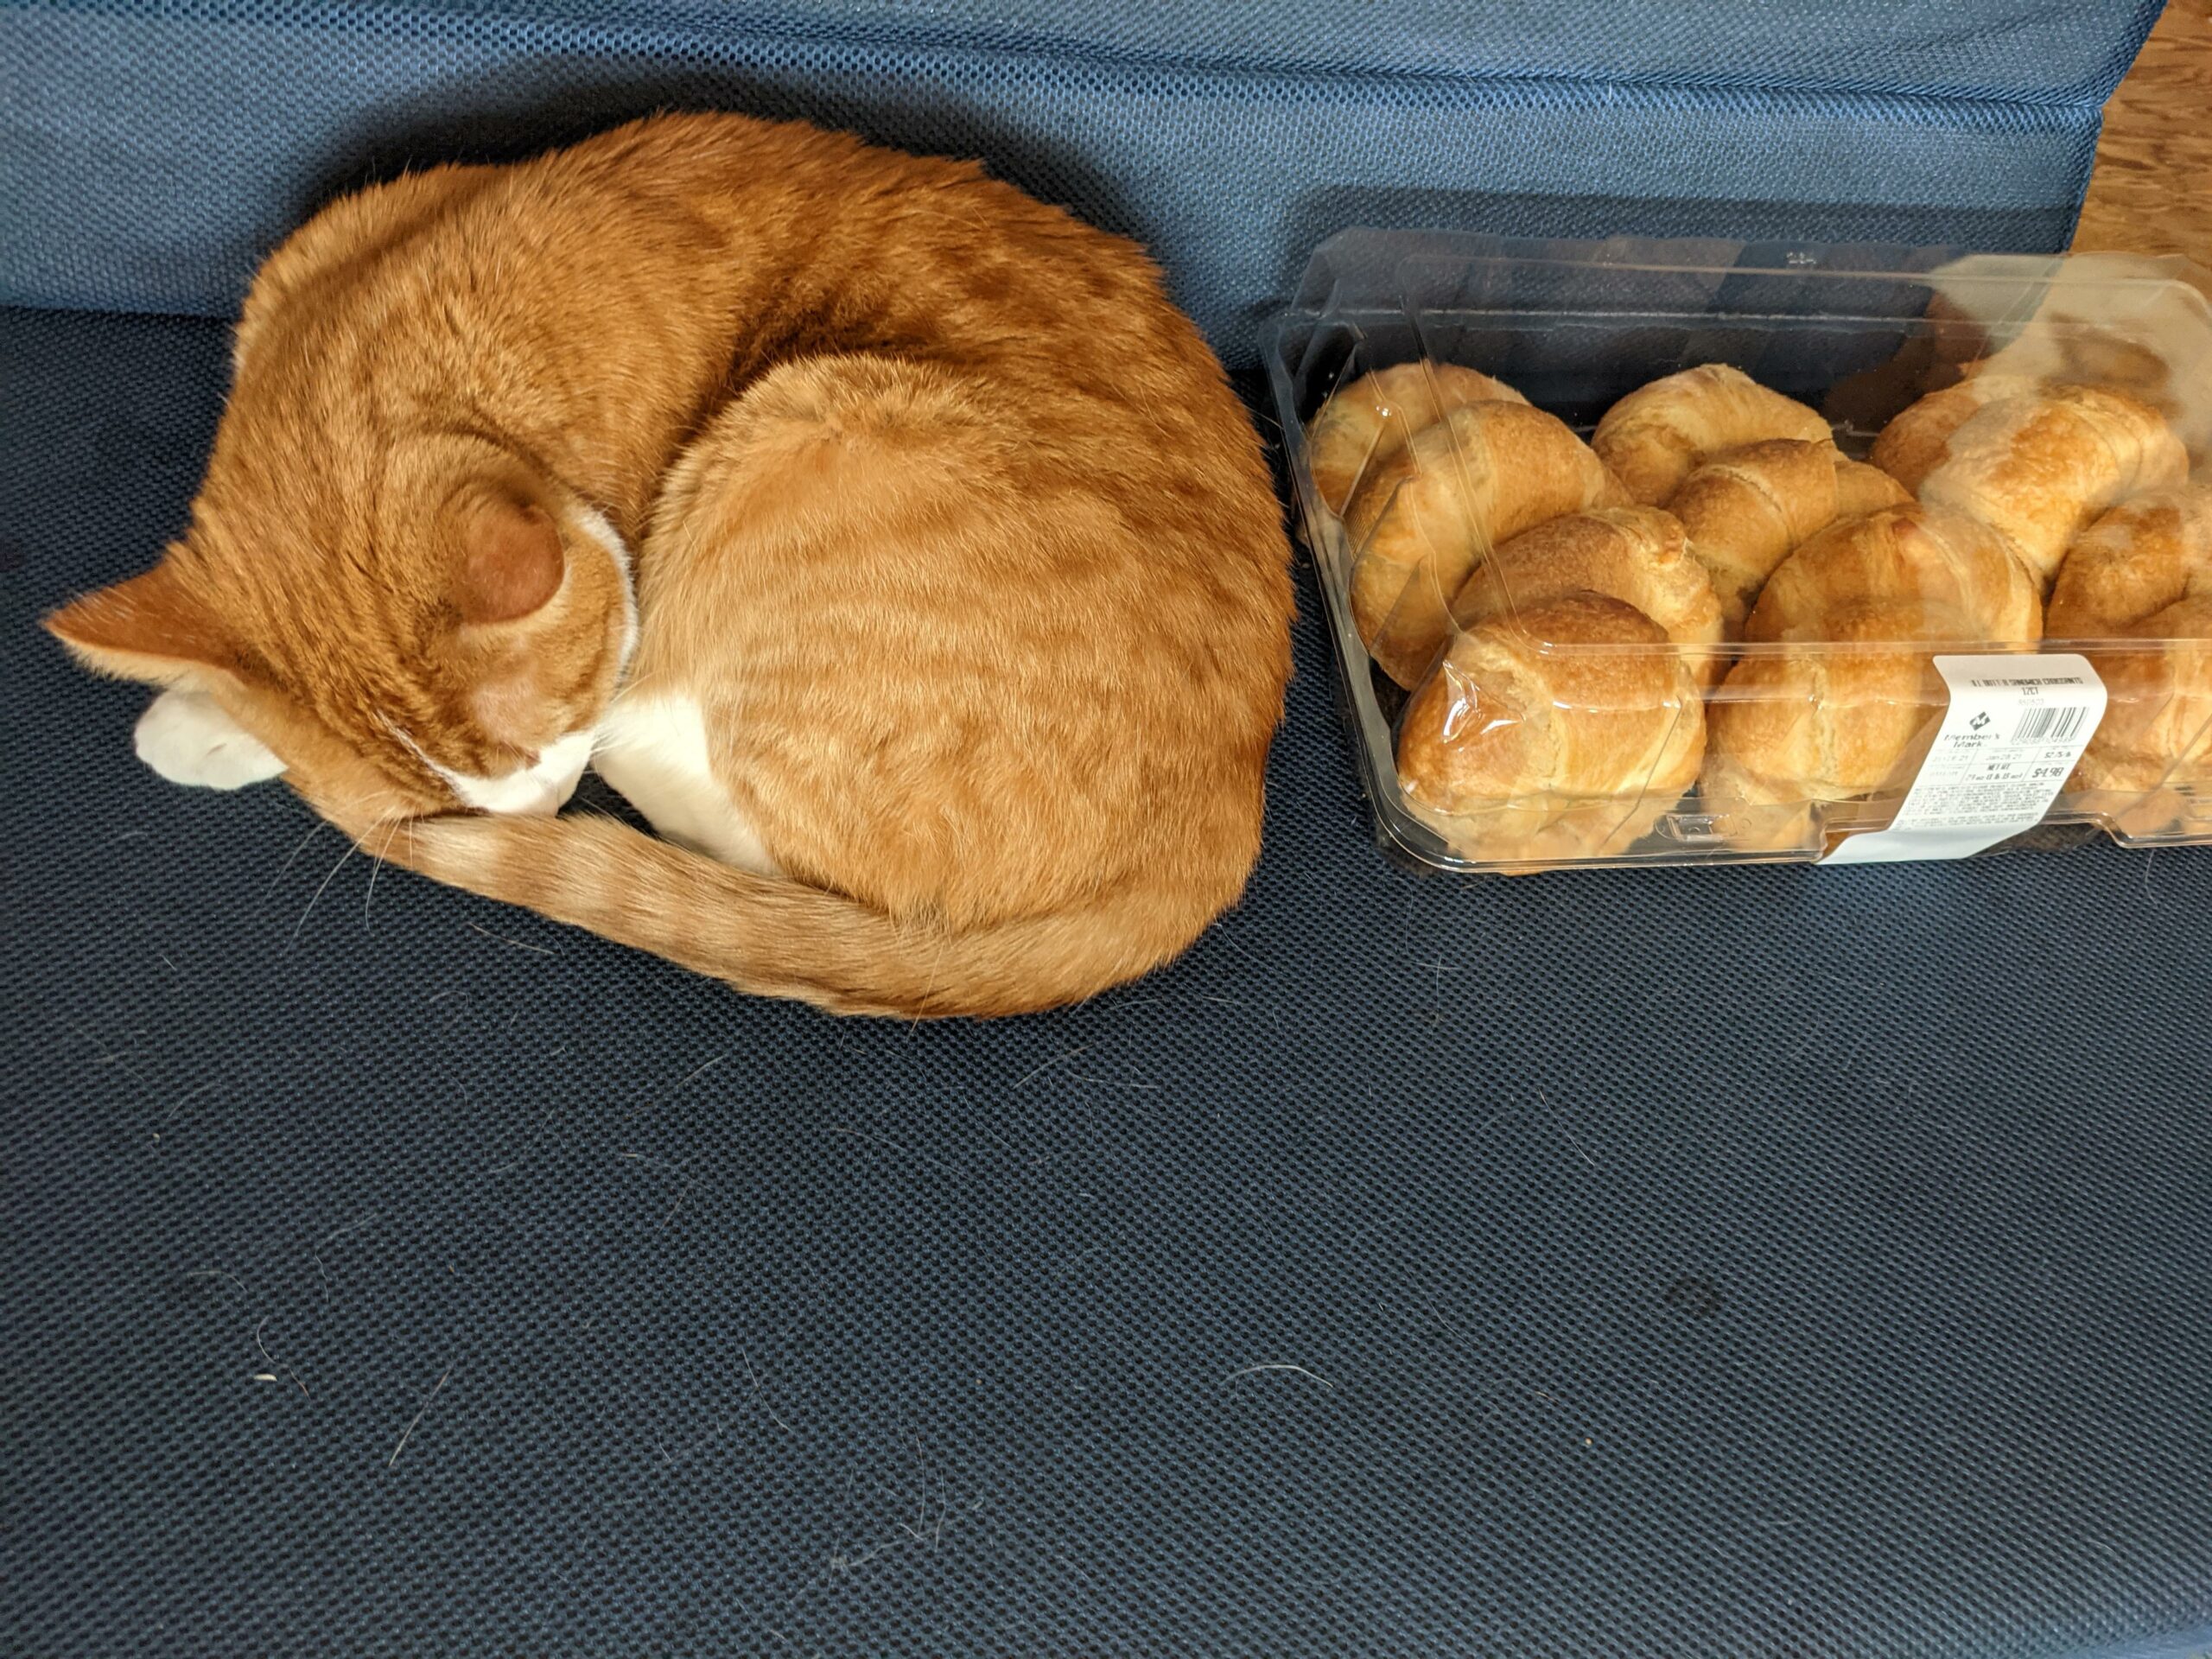 orange cat curled up next to orange croissants that look like 6 orange kittens